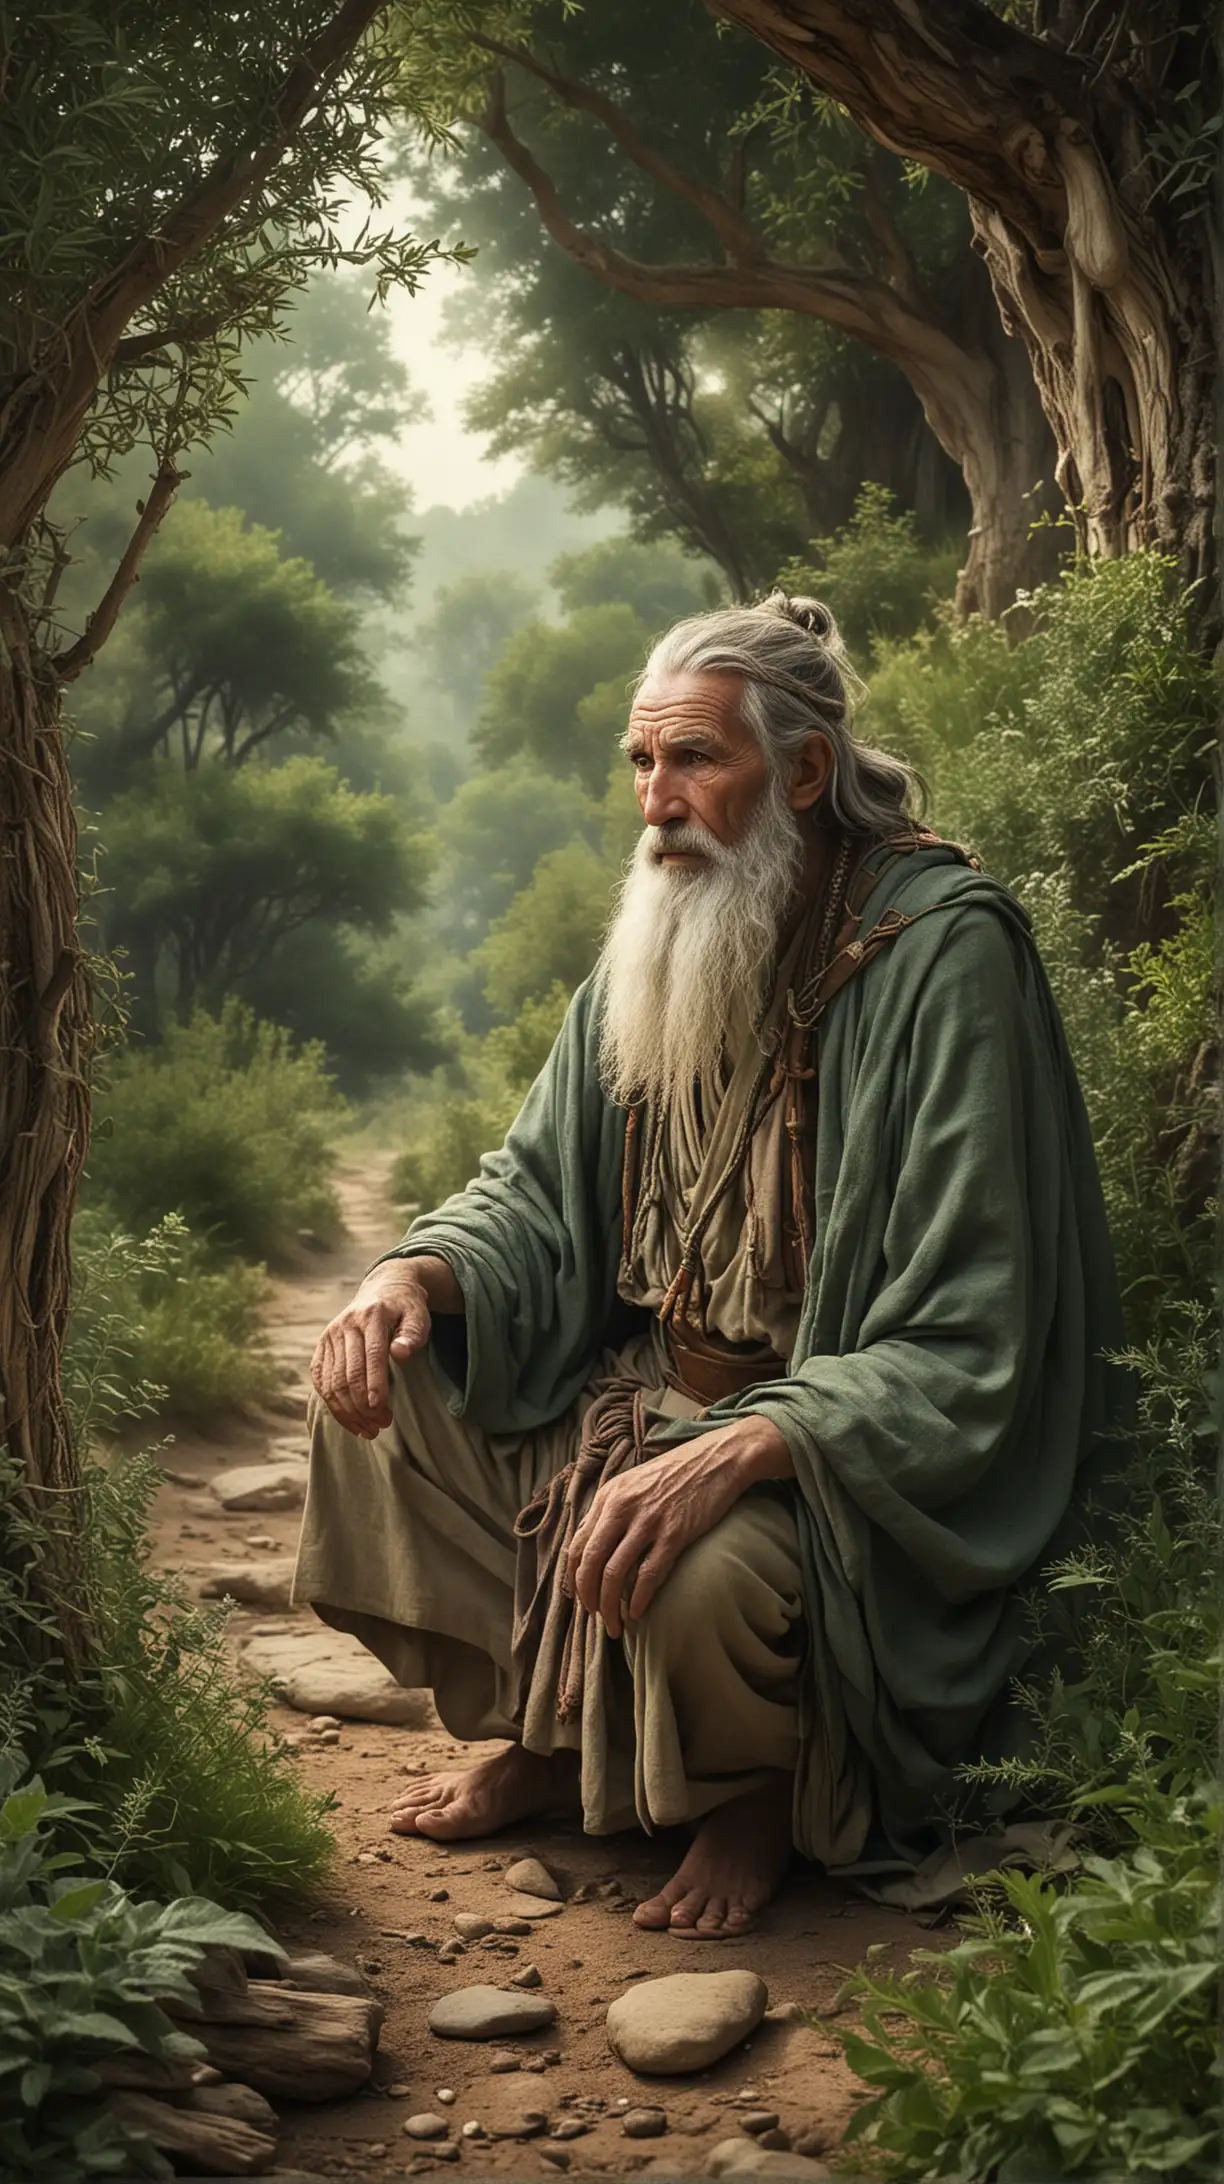 Sage Providing Wisdom to Weary Traveler in Ancient Kingdom